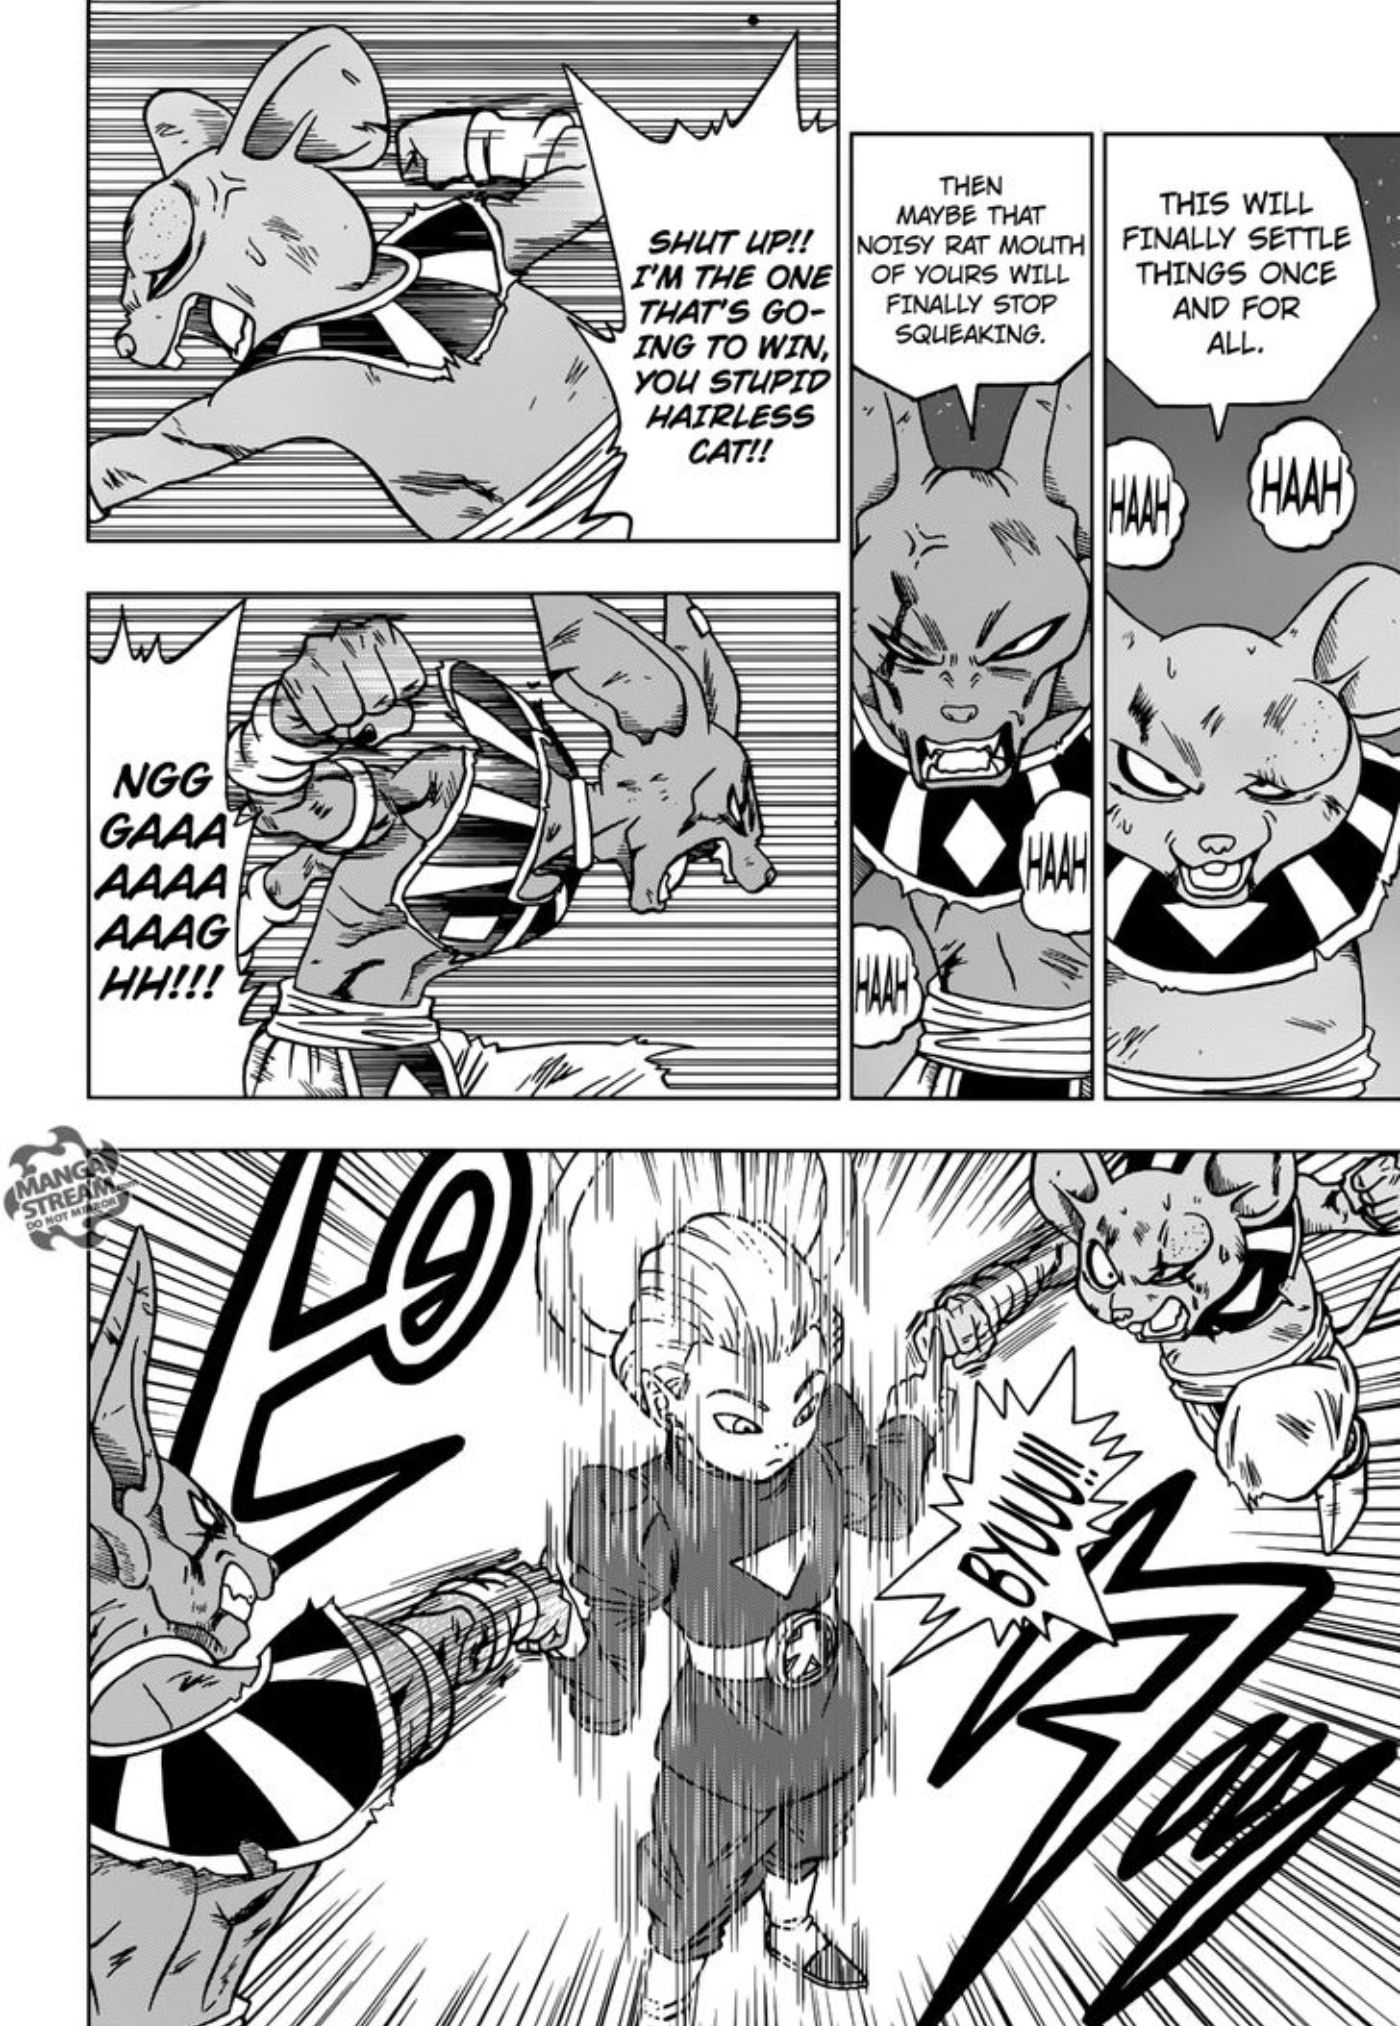 Dragon Ball Super’s Greatest Rivalry isn’t Goku & Vegeta